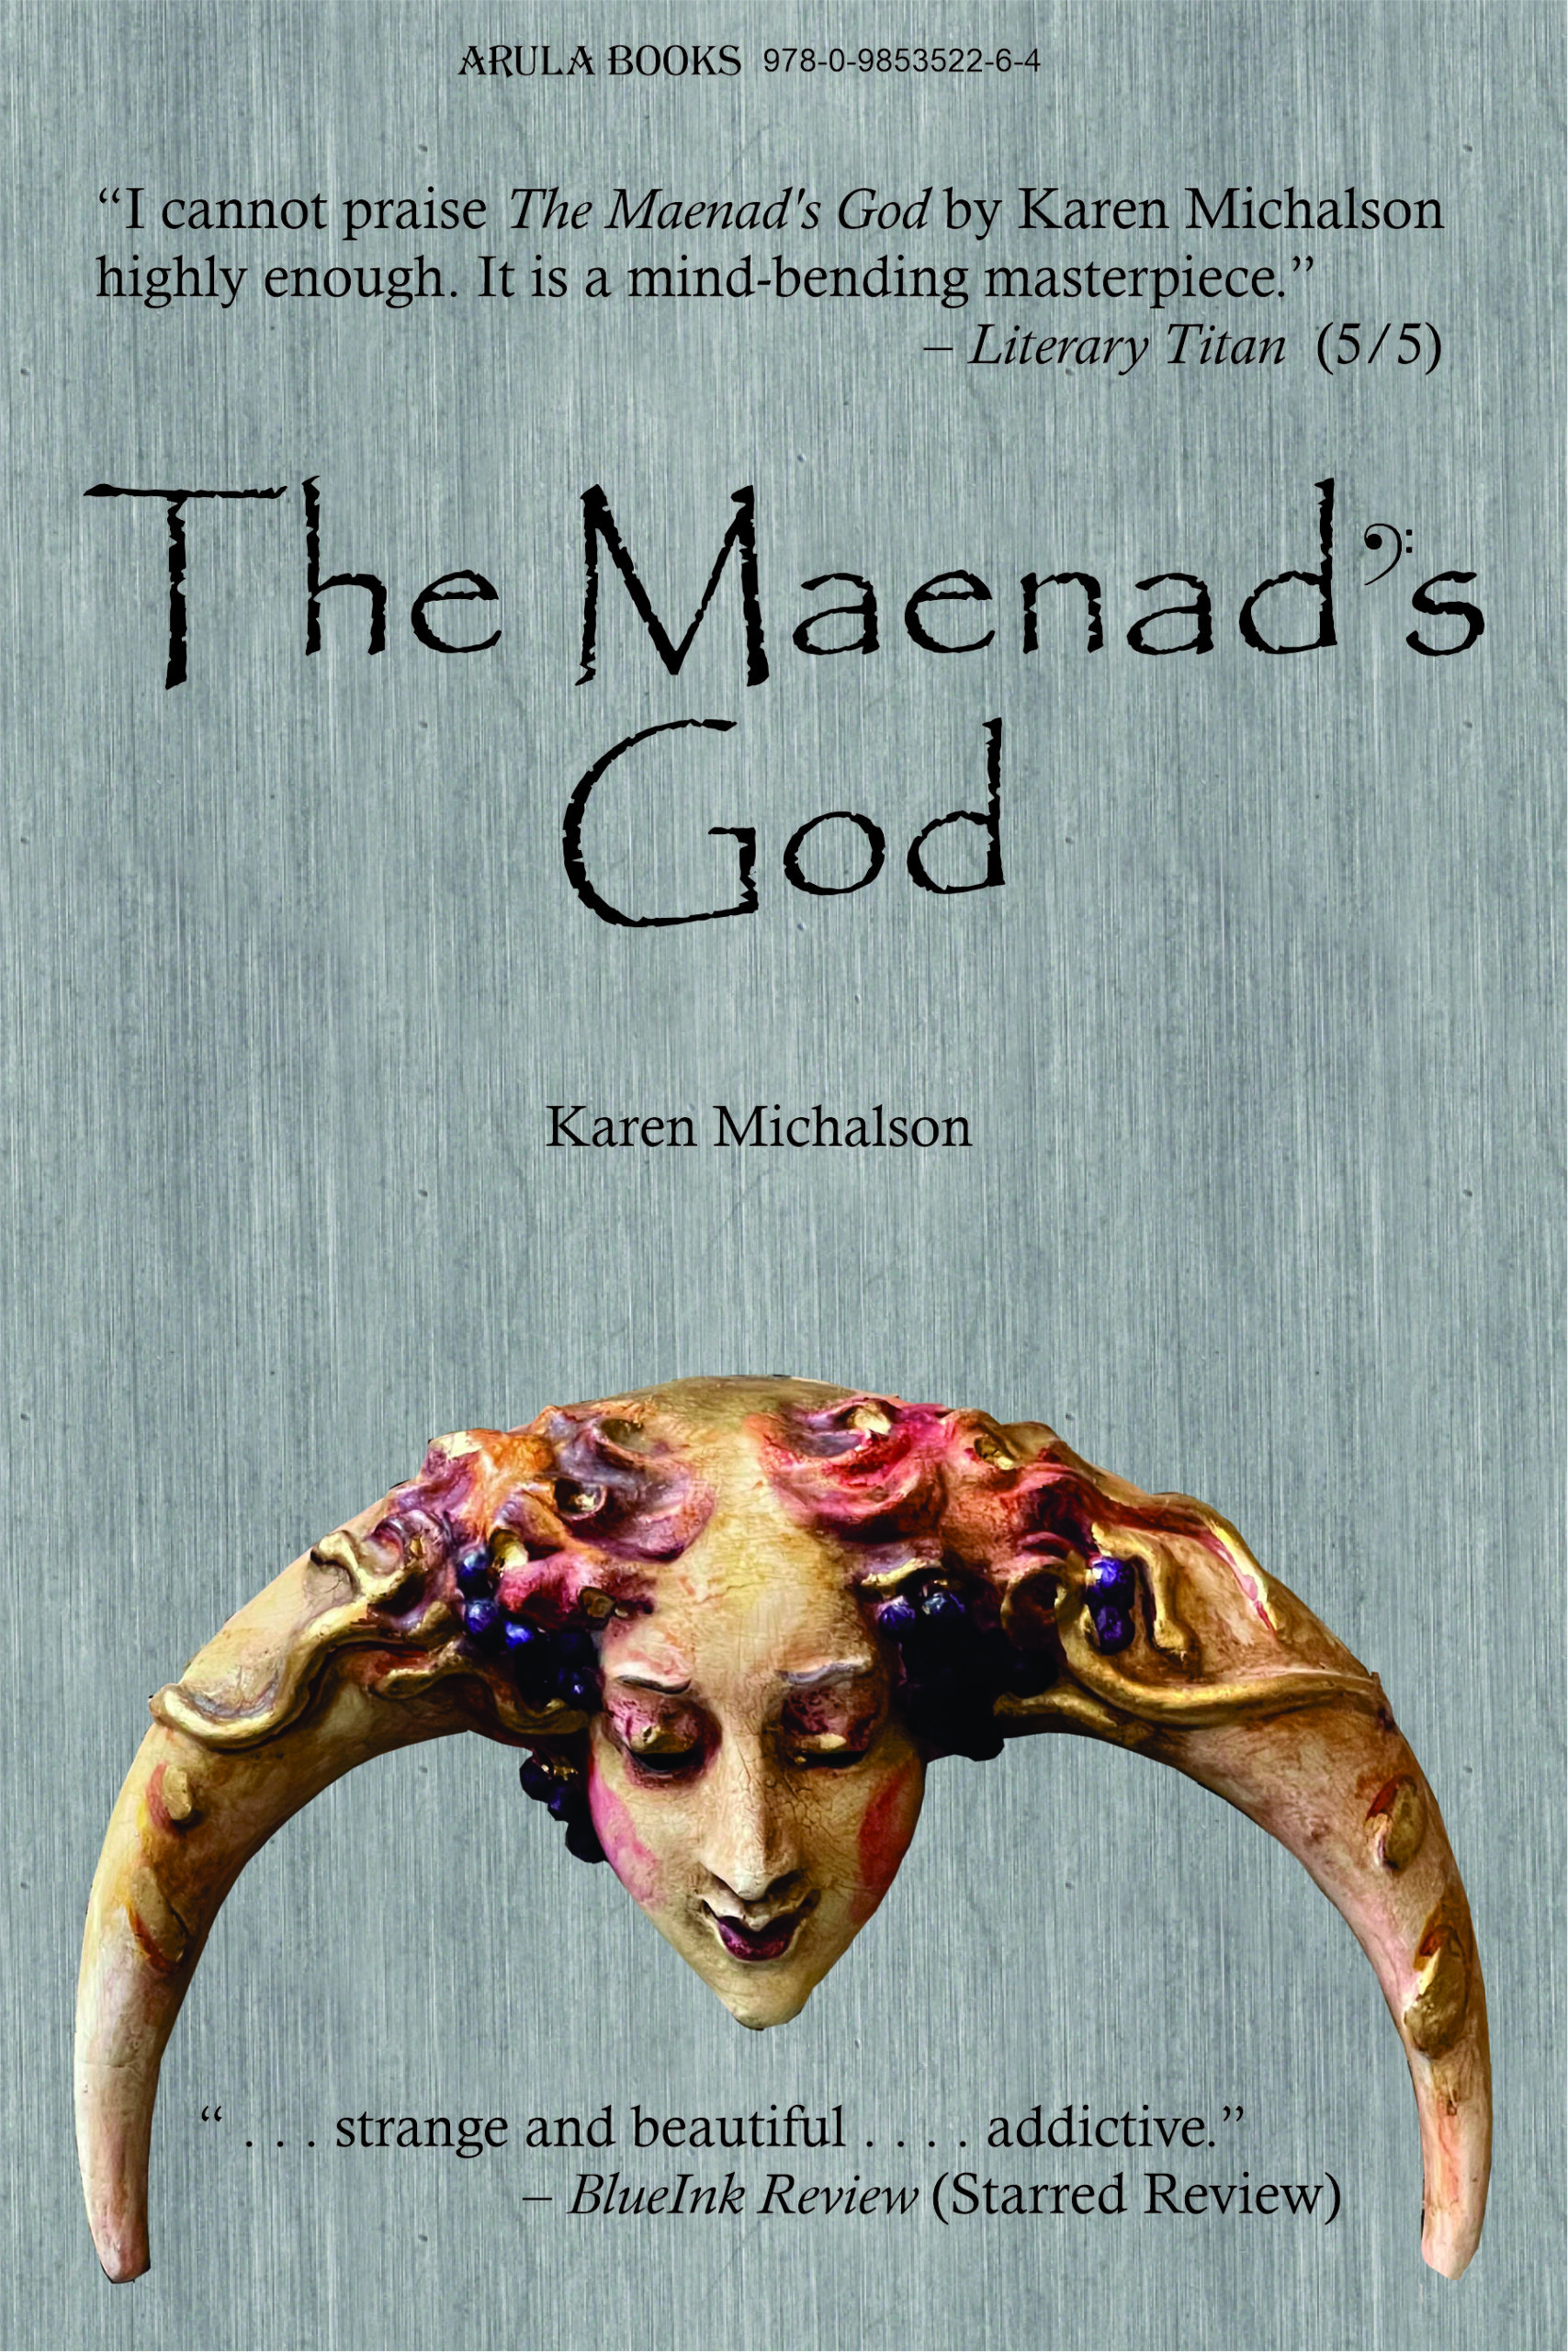 The Maenad's God by Karen Michalson